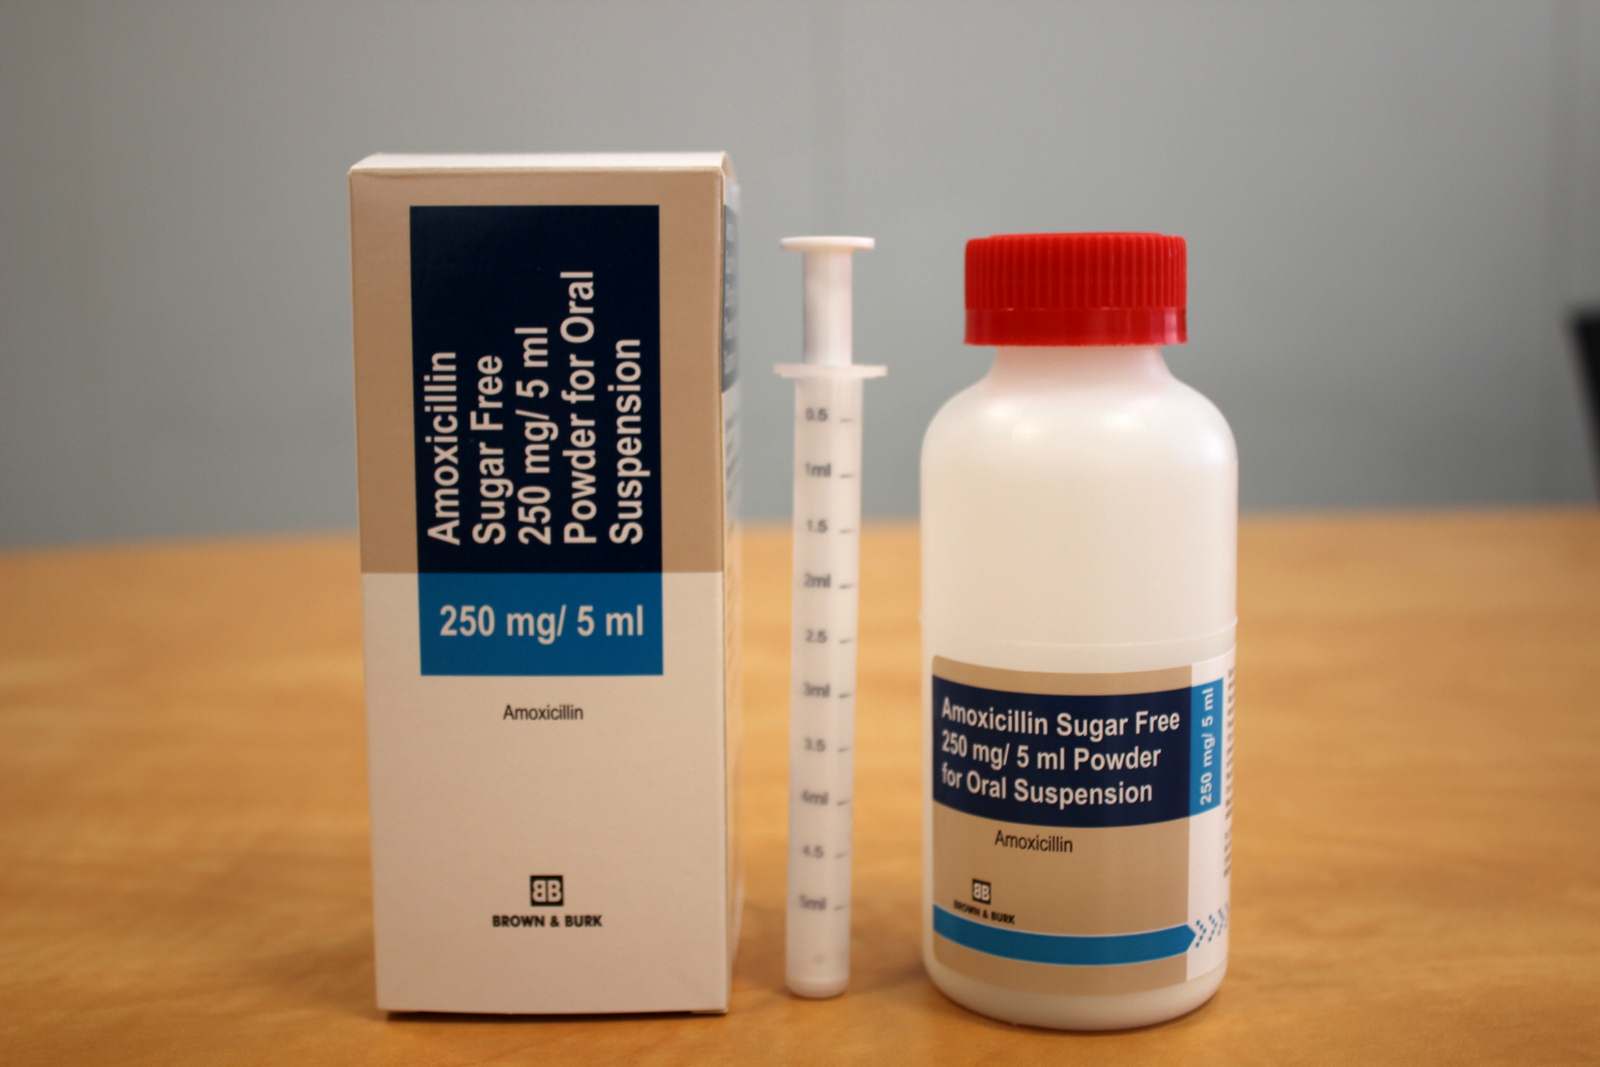 Amoxicillin Sugar Free 250mg/5ml Powder For Oral Suspension